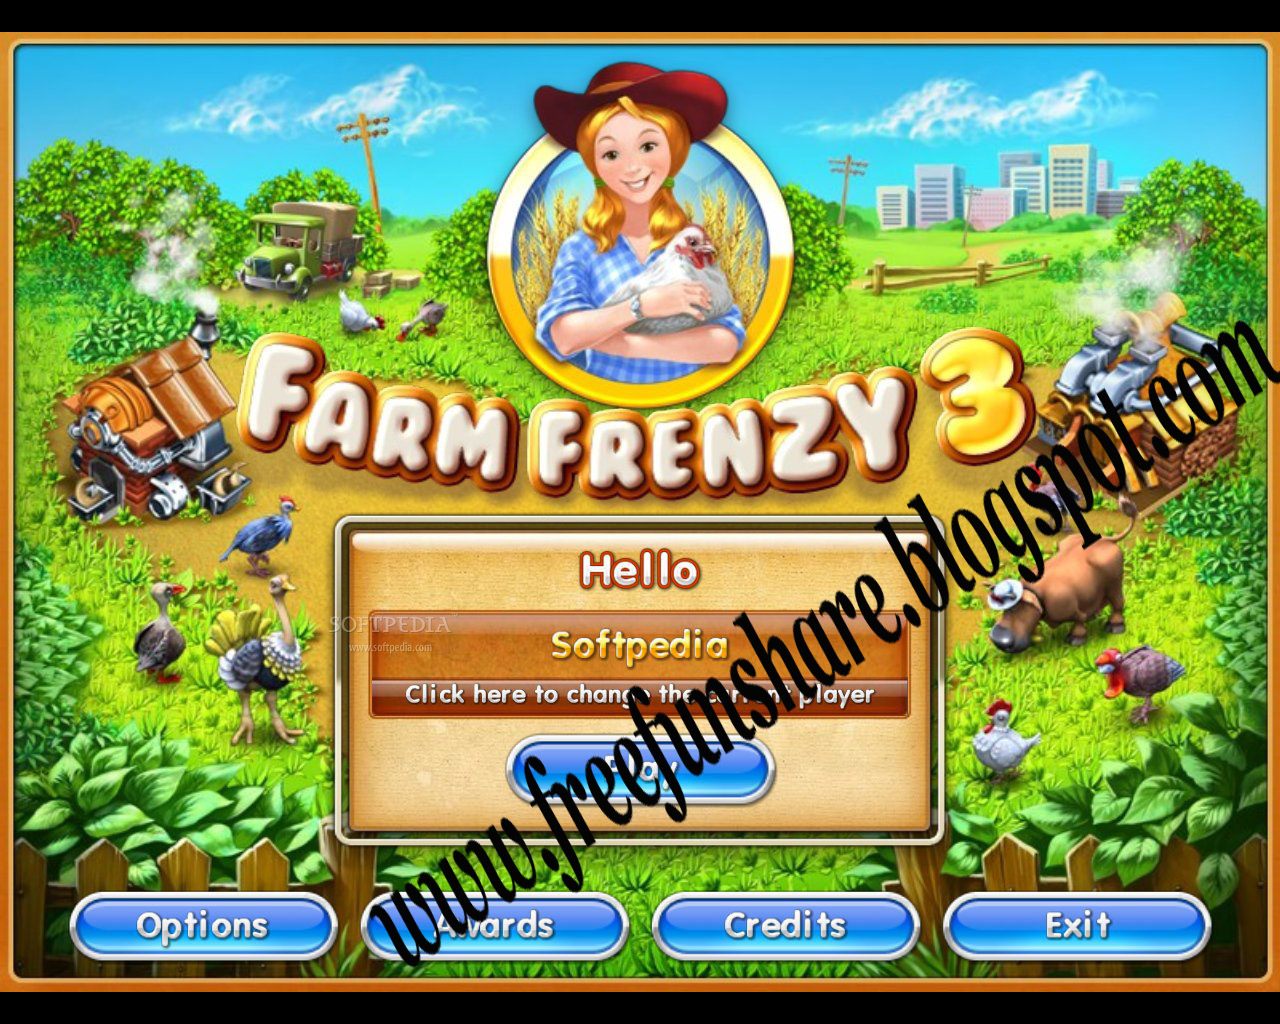 Farm frenzy 3 full version free download crack